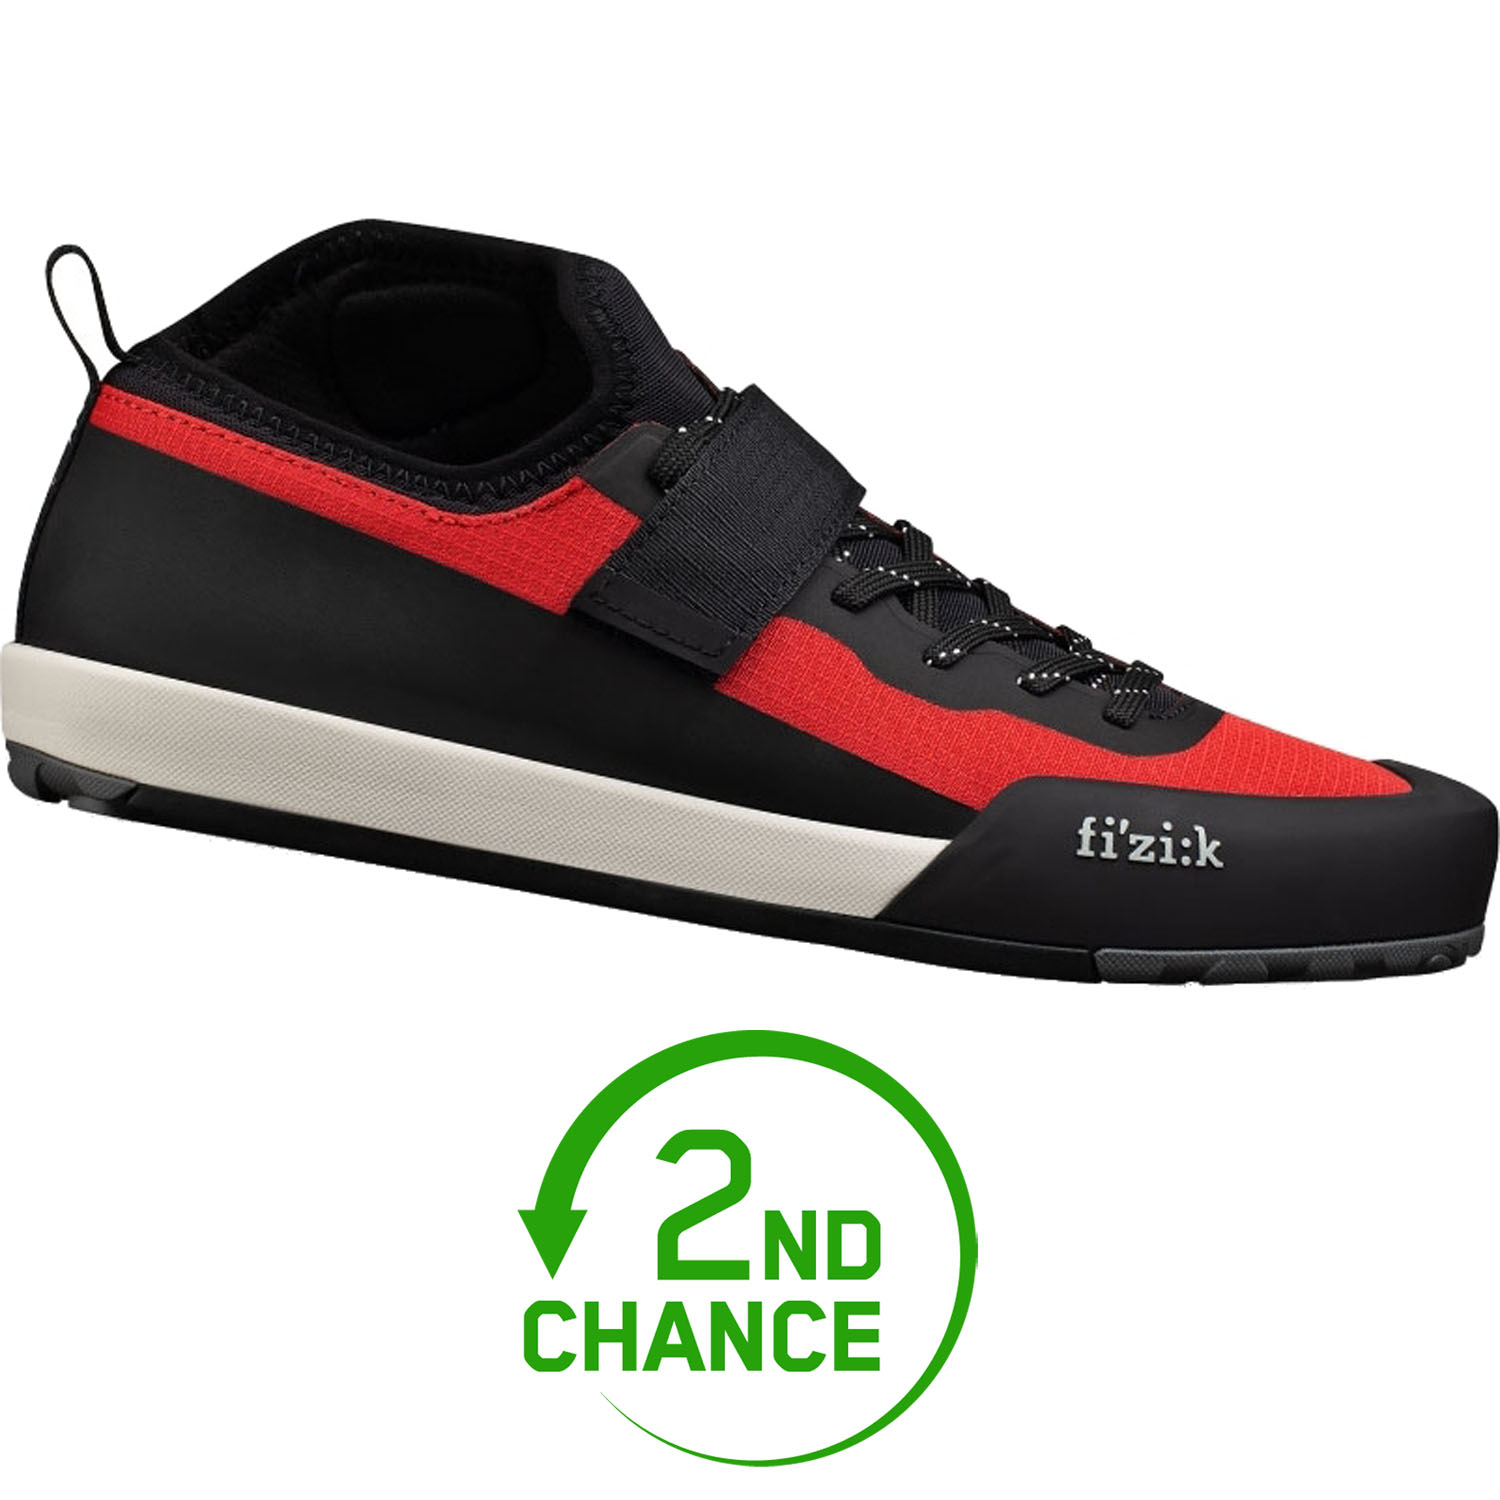 Fizik Gravita Tensor Flat MTB Shoes - red/black - 2nd Choice